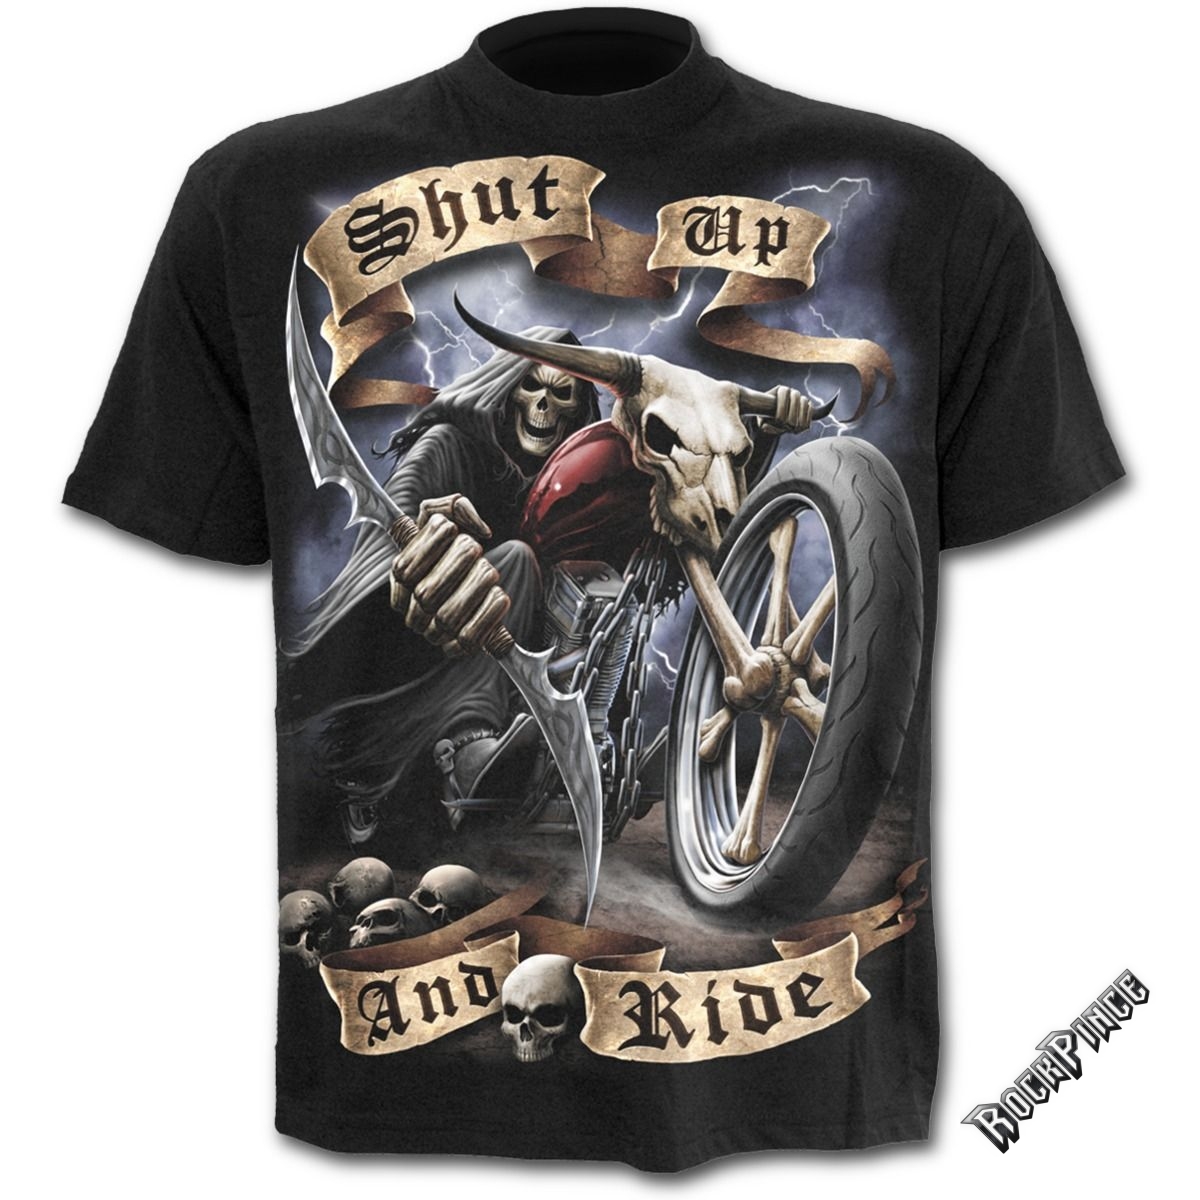 SHUT UP AND RIDE - T-Shirt Black - T070M101